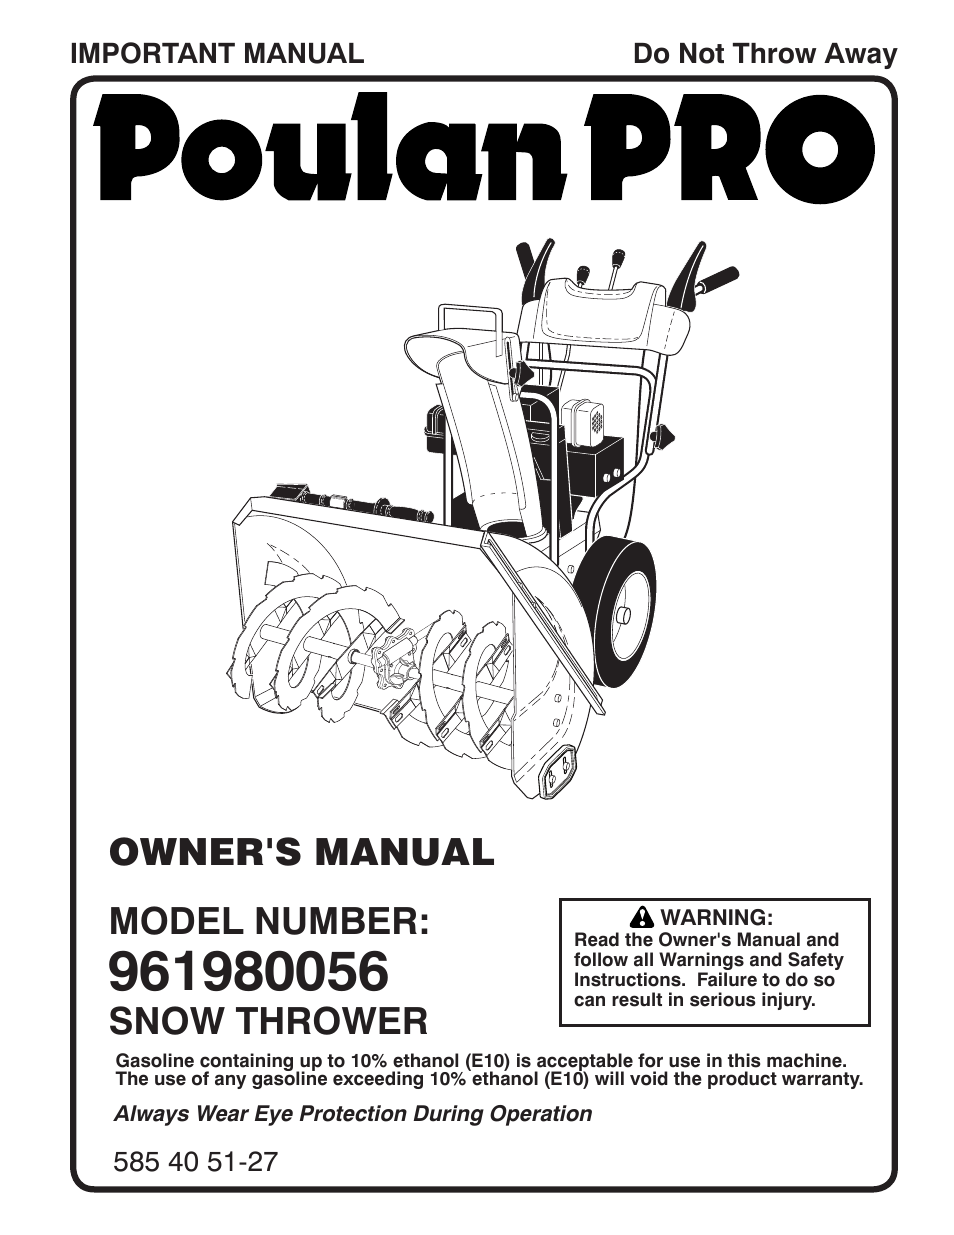 Poulan Pro 961980056 SNOW THROWER User Manual | 44 pages | Original mode